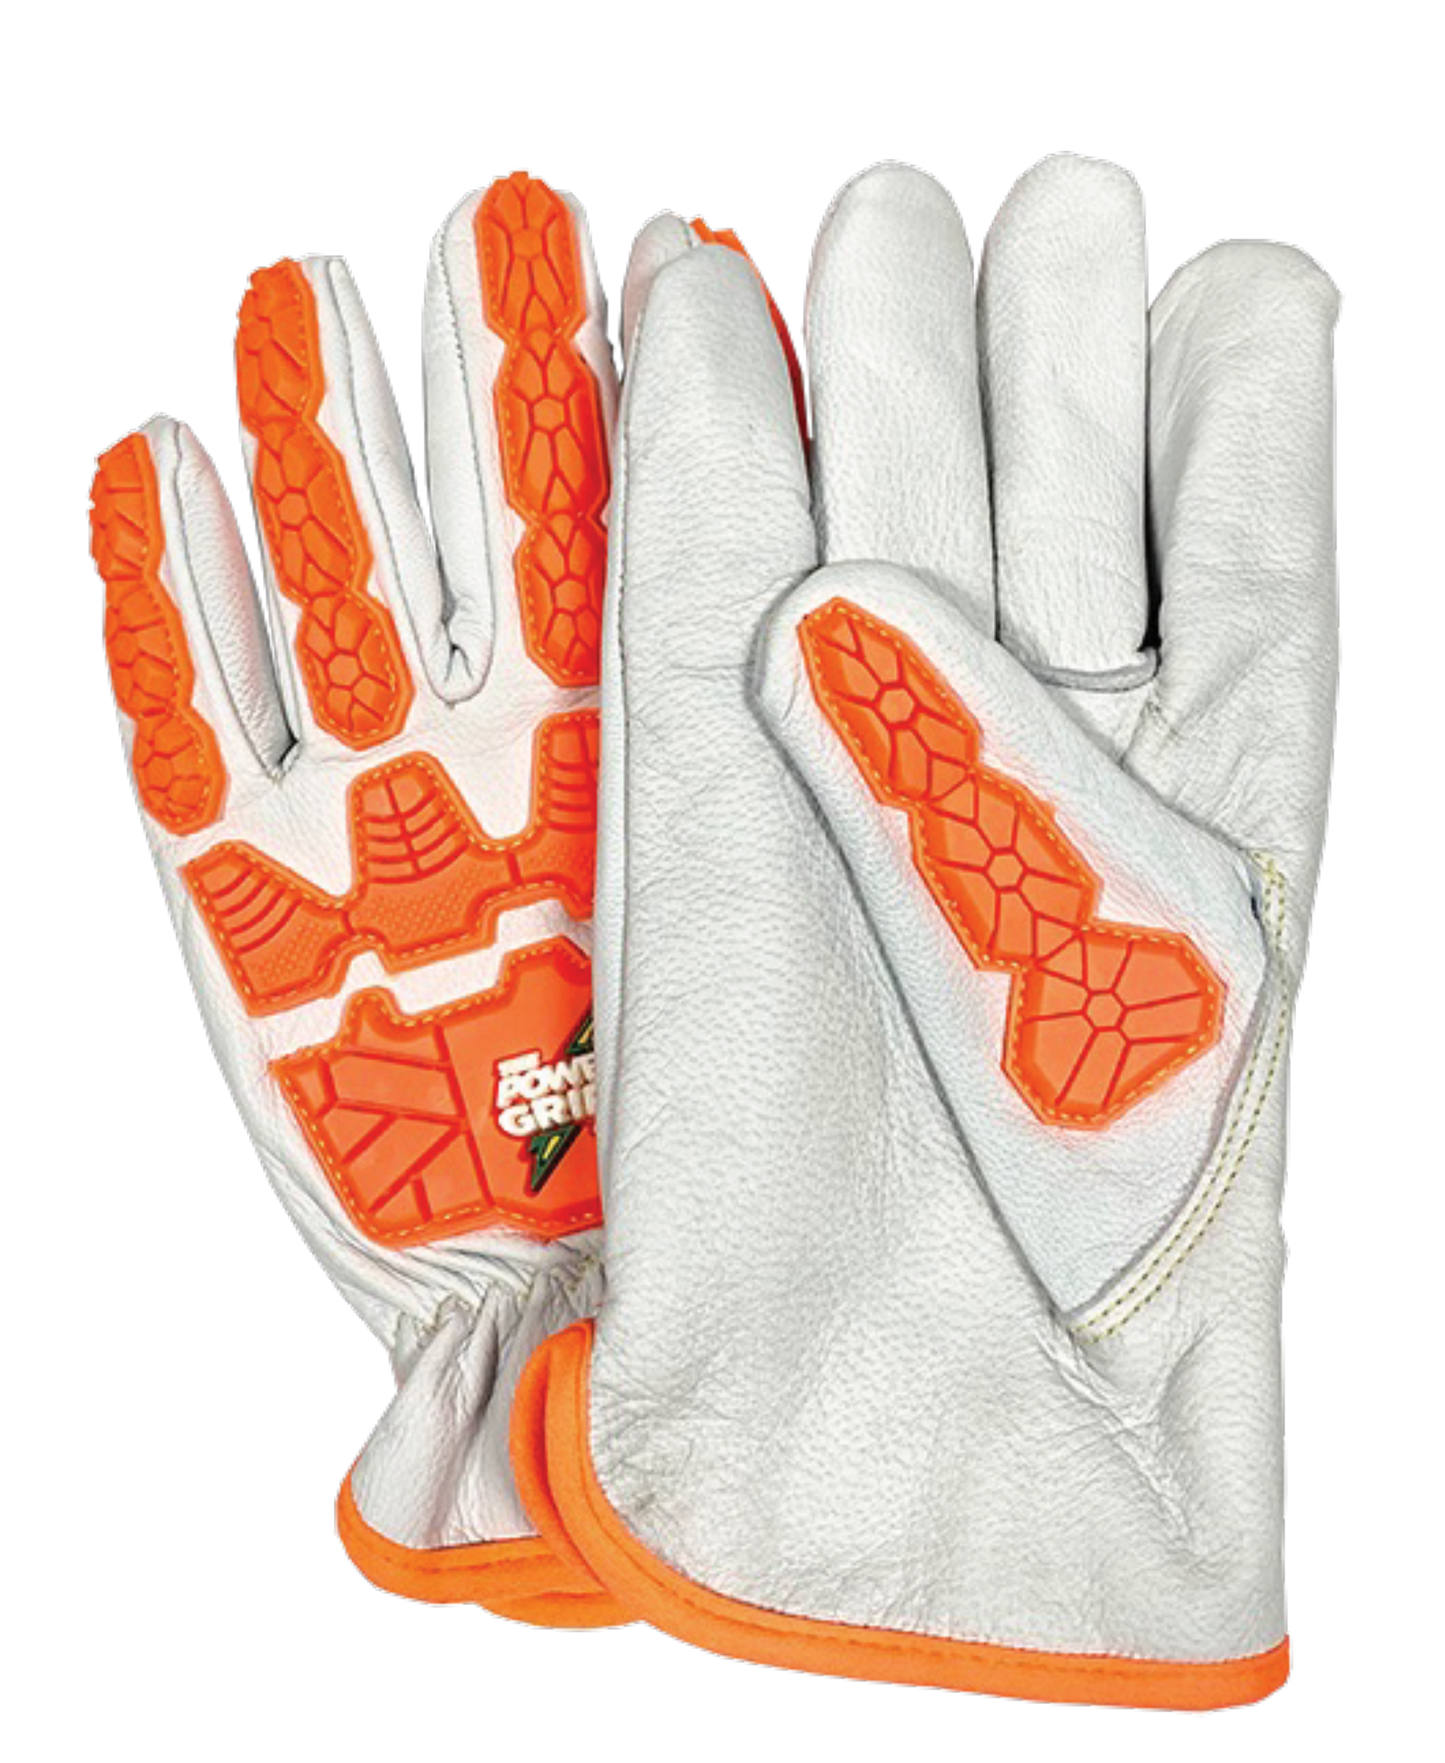 Impact/Cut-Resistant Work Gloves